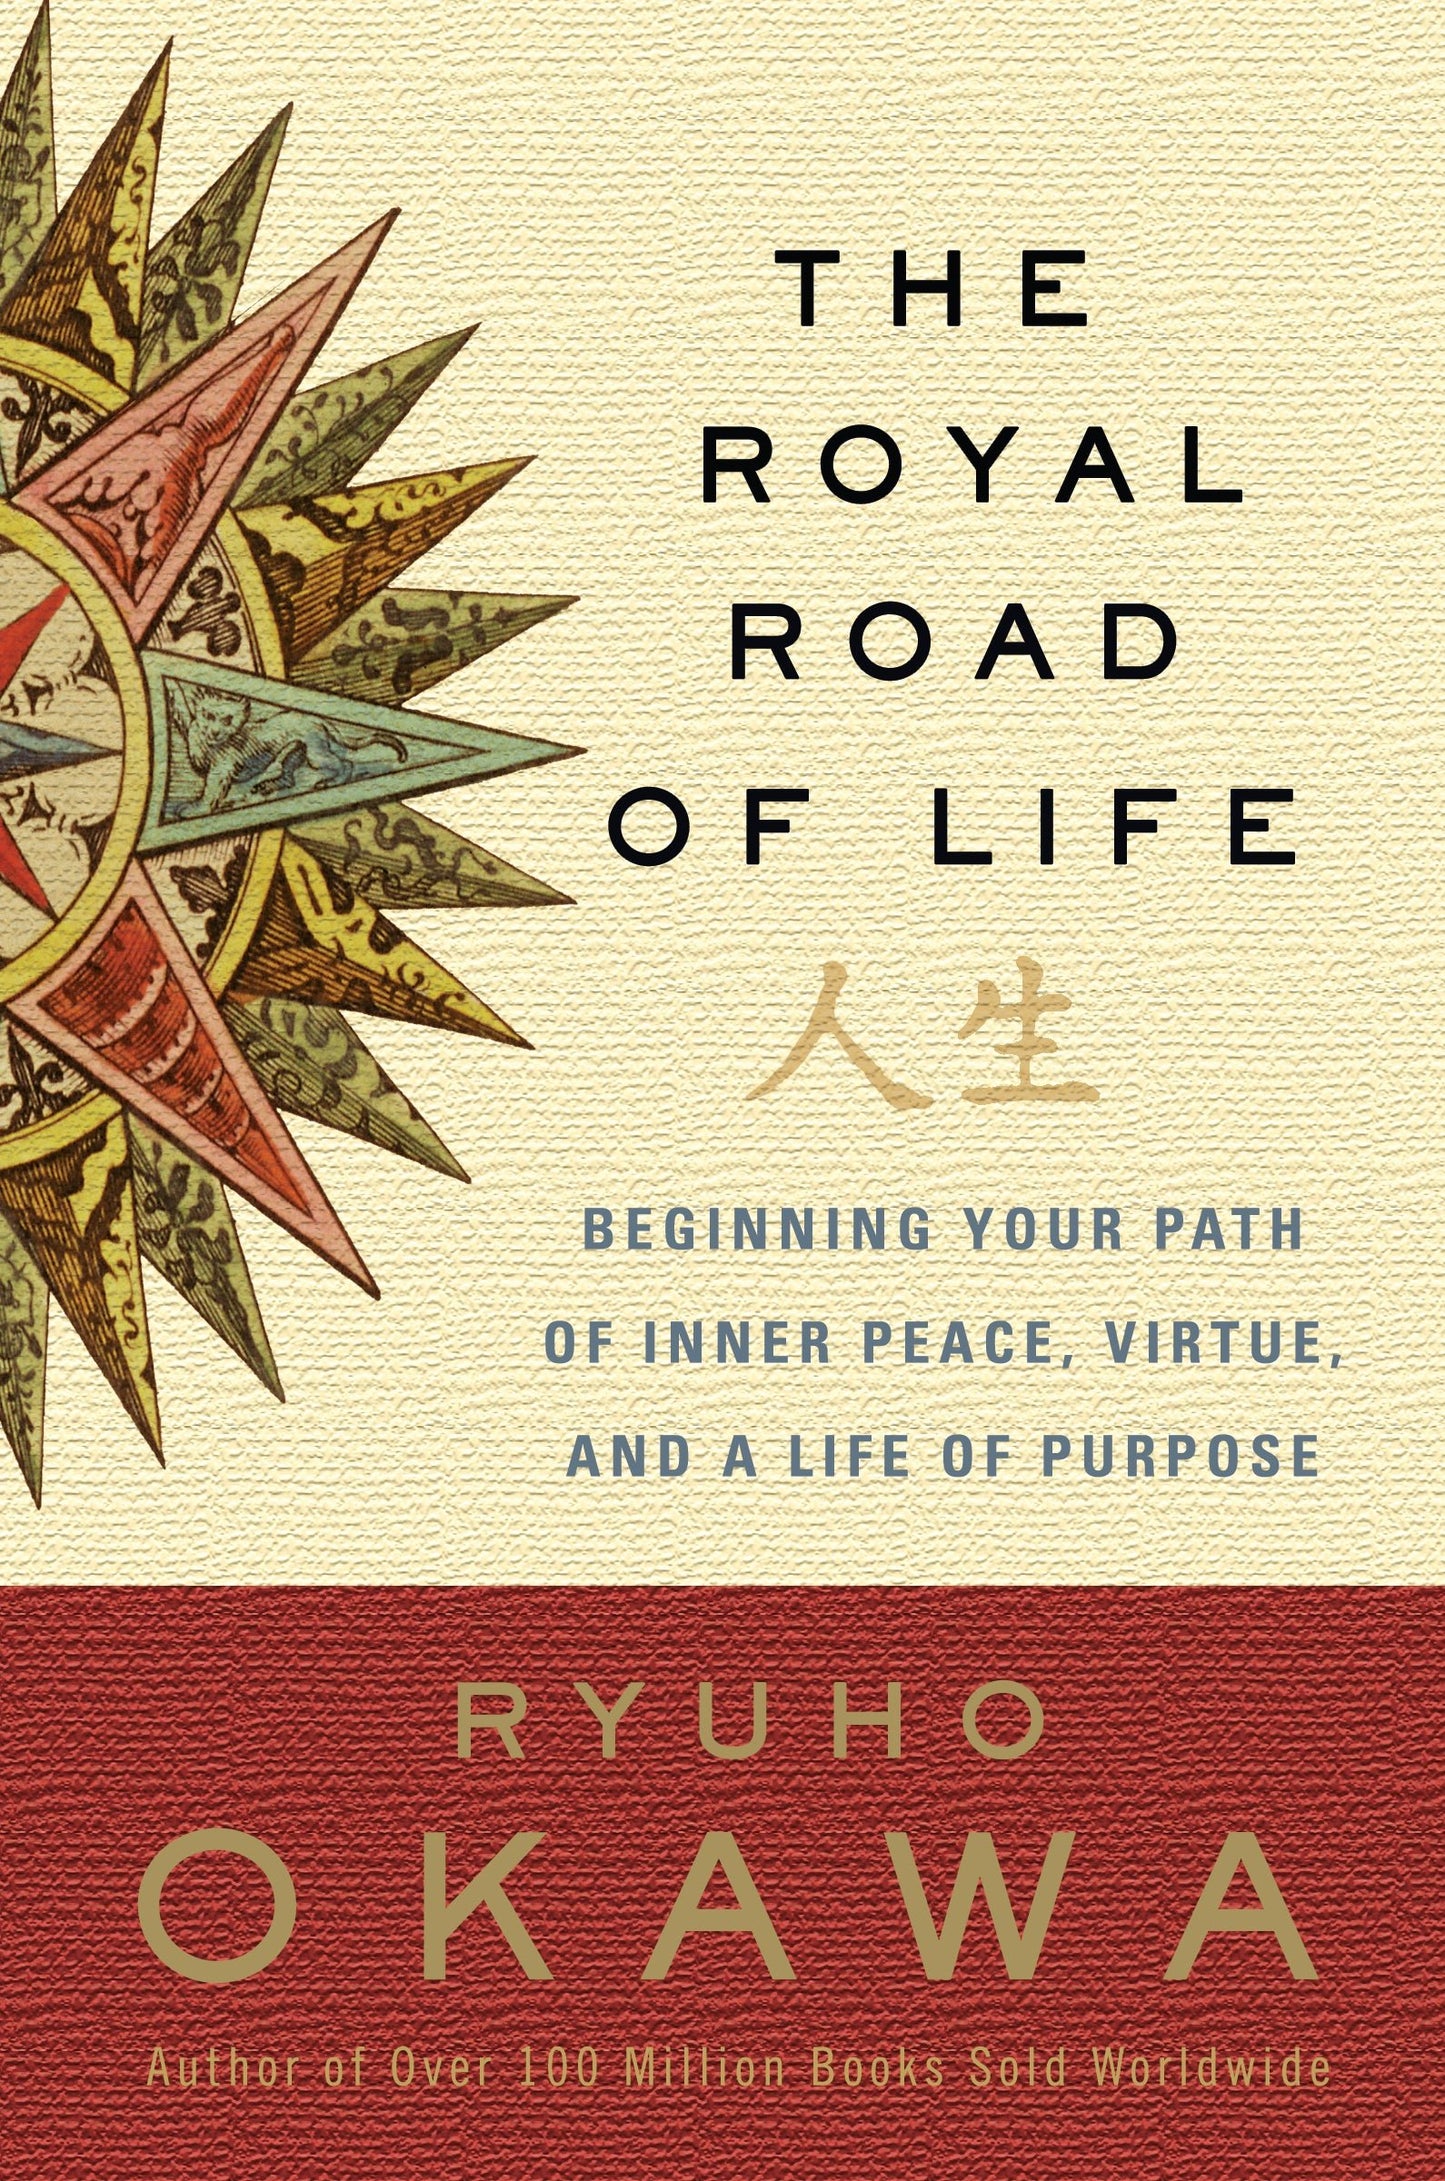 The Royal Road of Life : Beginning Your Path of Inner Peace, Virtue, and a Life of Purpose, Ryuho Okawa, English - IRH Press International